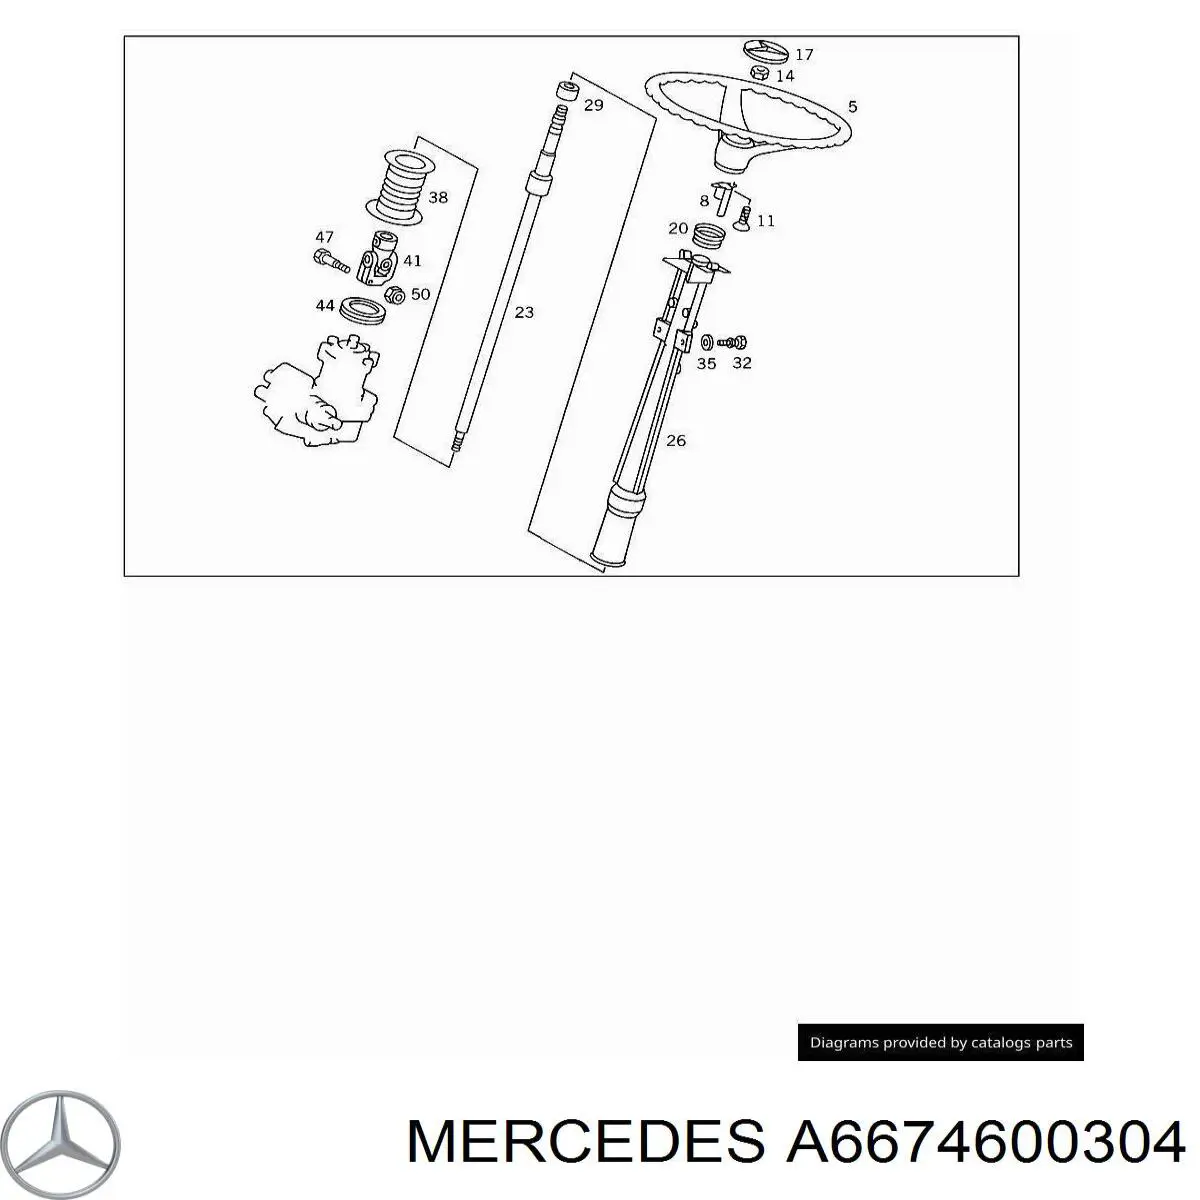 A6674600304 Mercedes bombín de cerradura de encendido